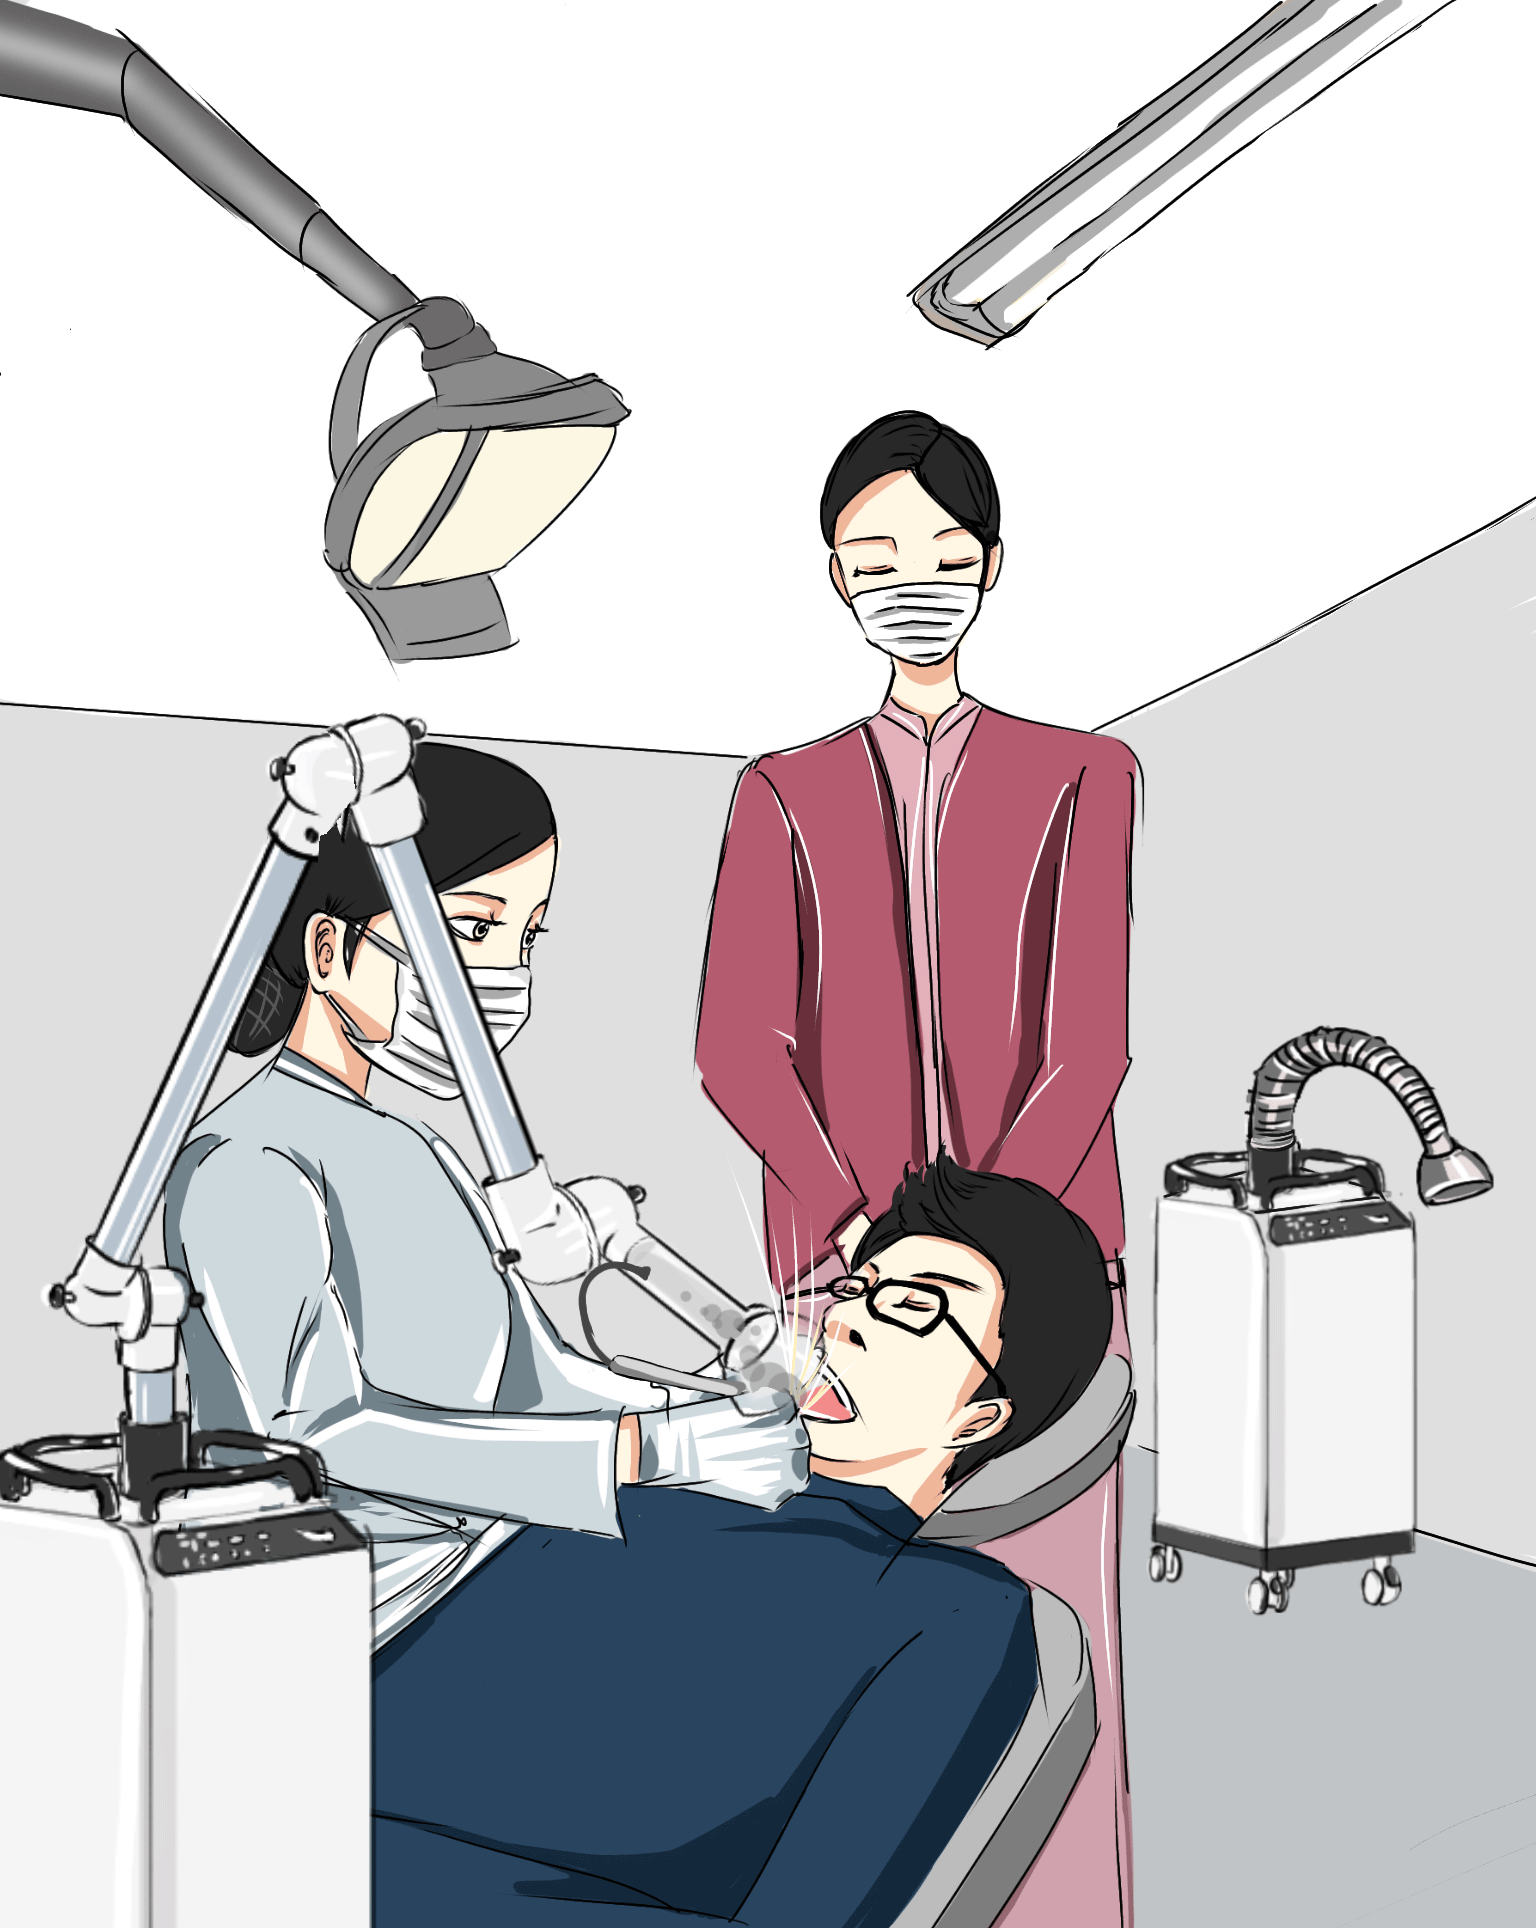 Aerosol Suction System in a dental clinic